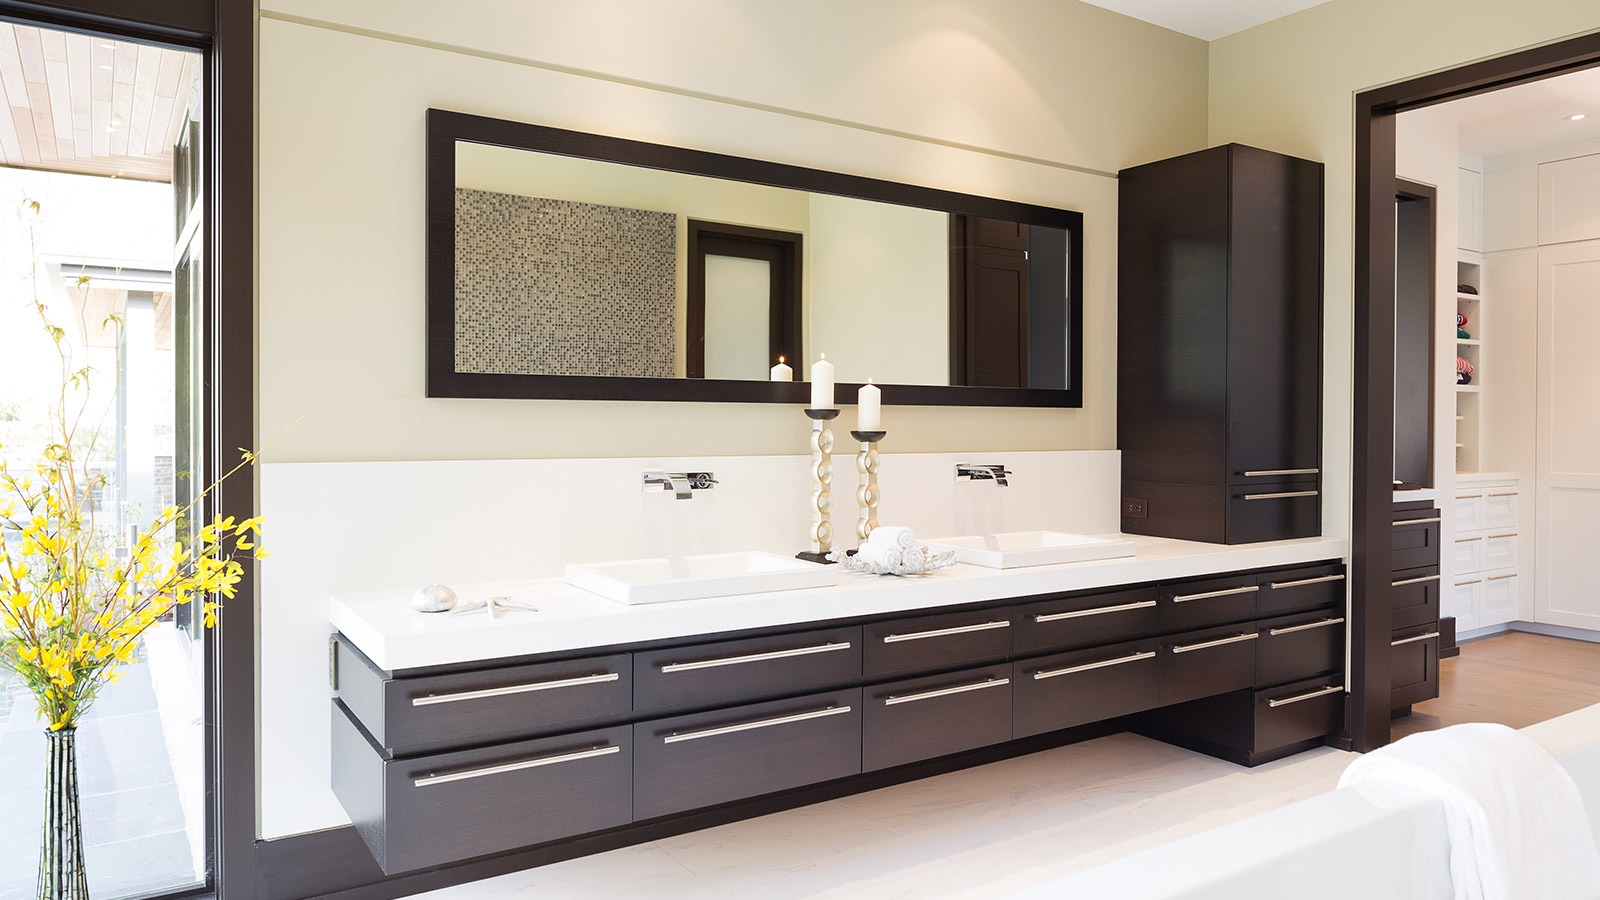 Modern bathroom with wood drawers, tile floor and black frame windows.